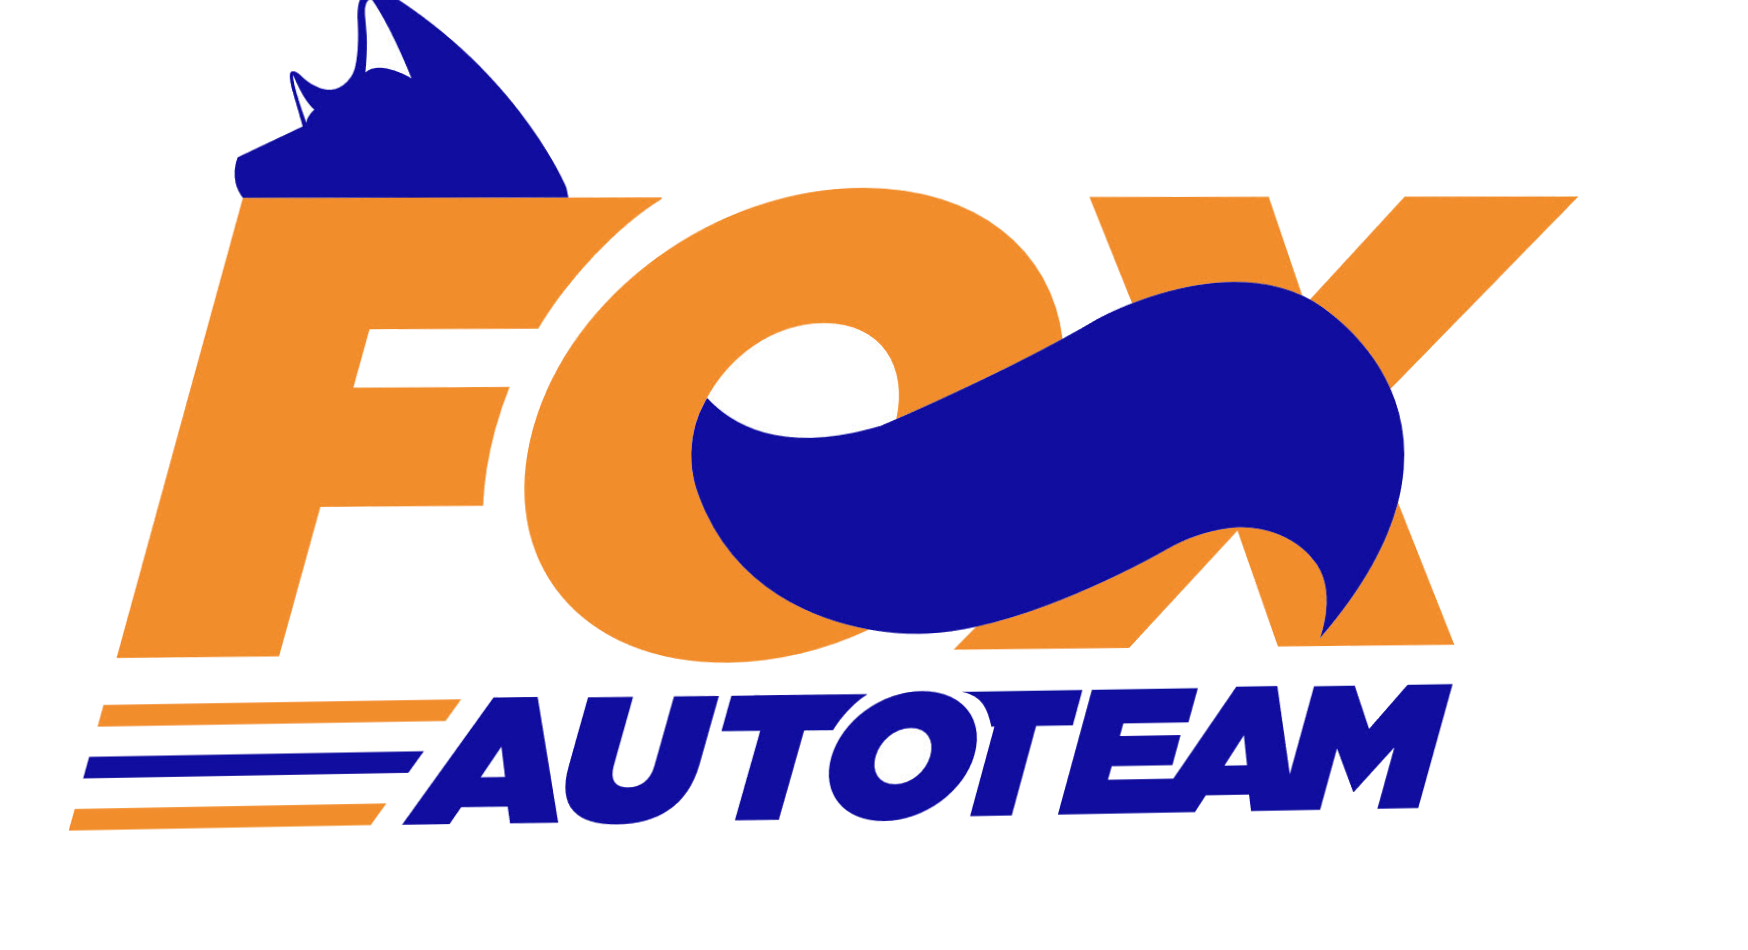 Fox Auto team logo